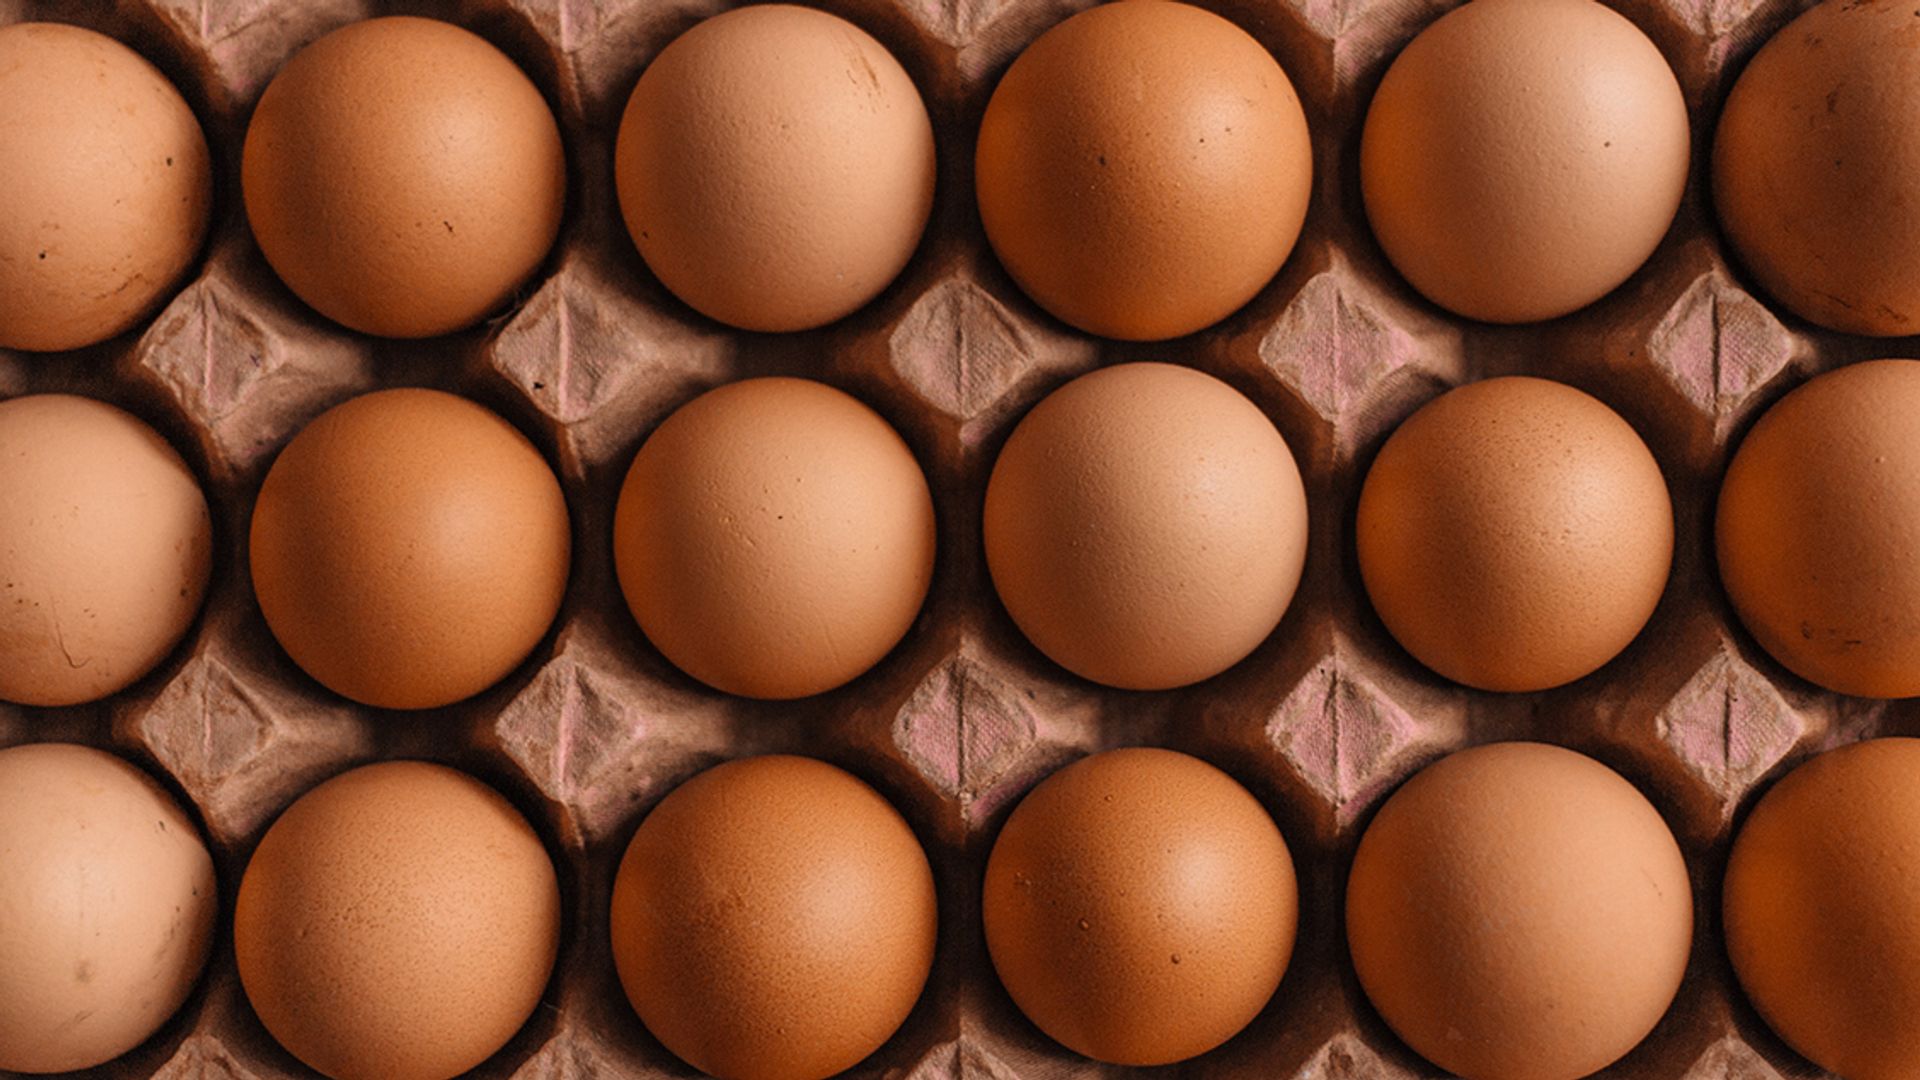 Voetzool Posters Bloeien Hoelang kun je eieren bewaren? - Kassa - BNNVARA